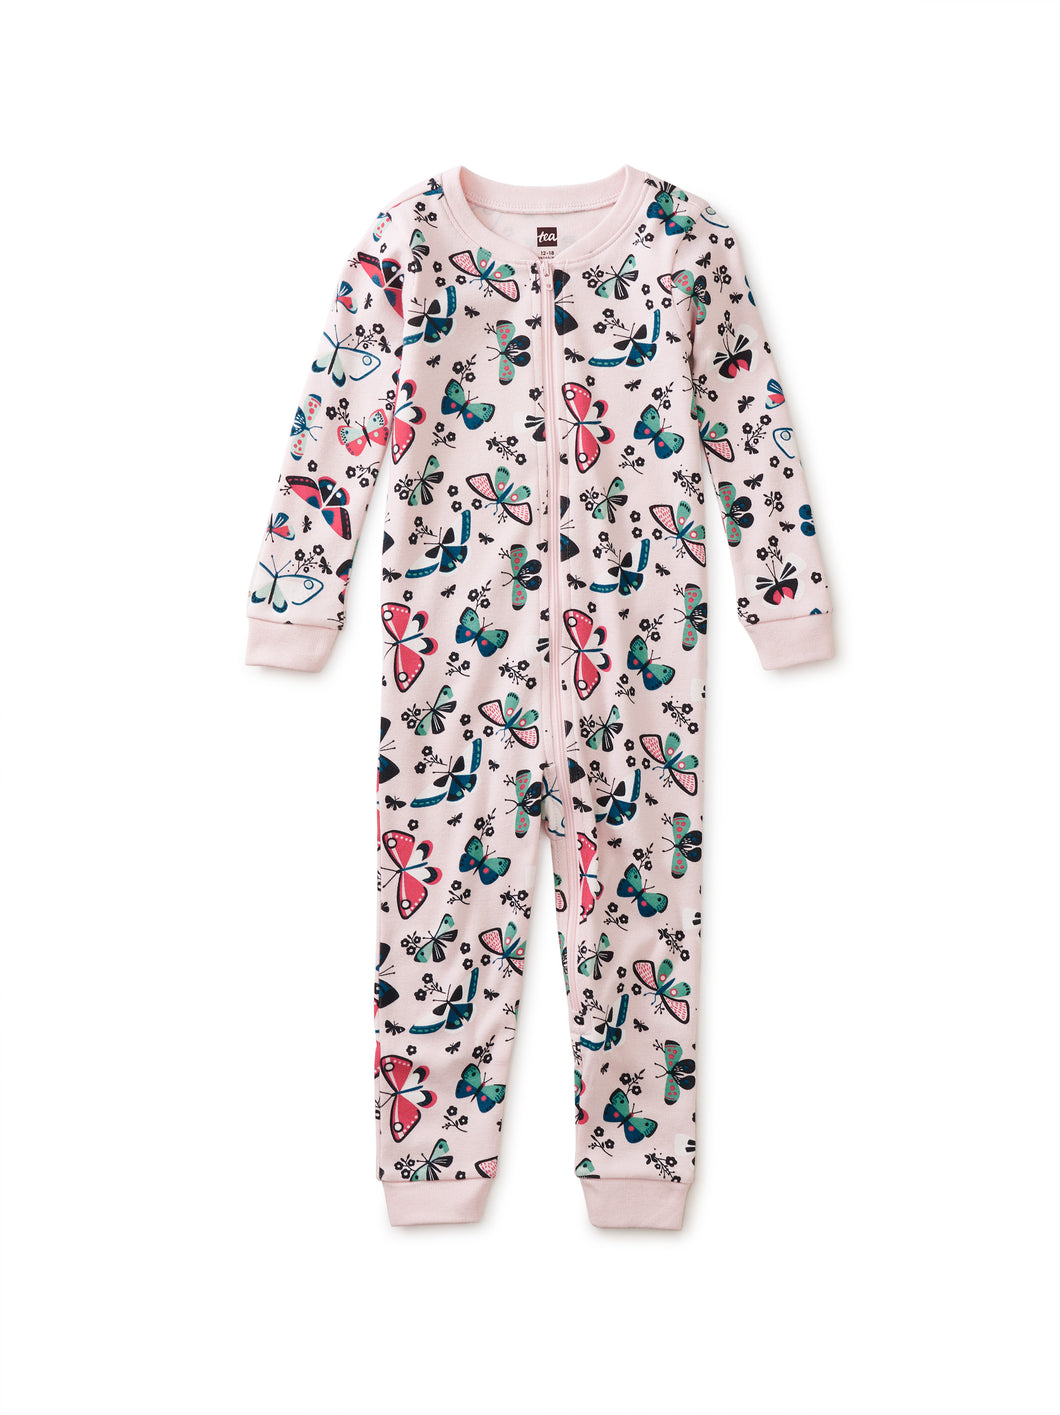 Tea Collection Baby Sleep Tight Pajamas - Butterfly